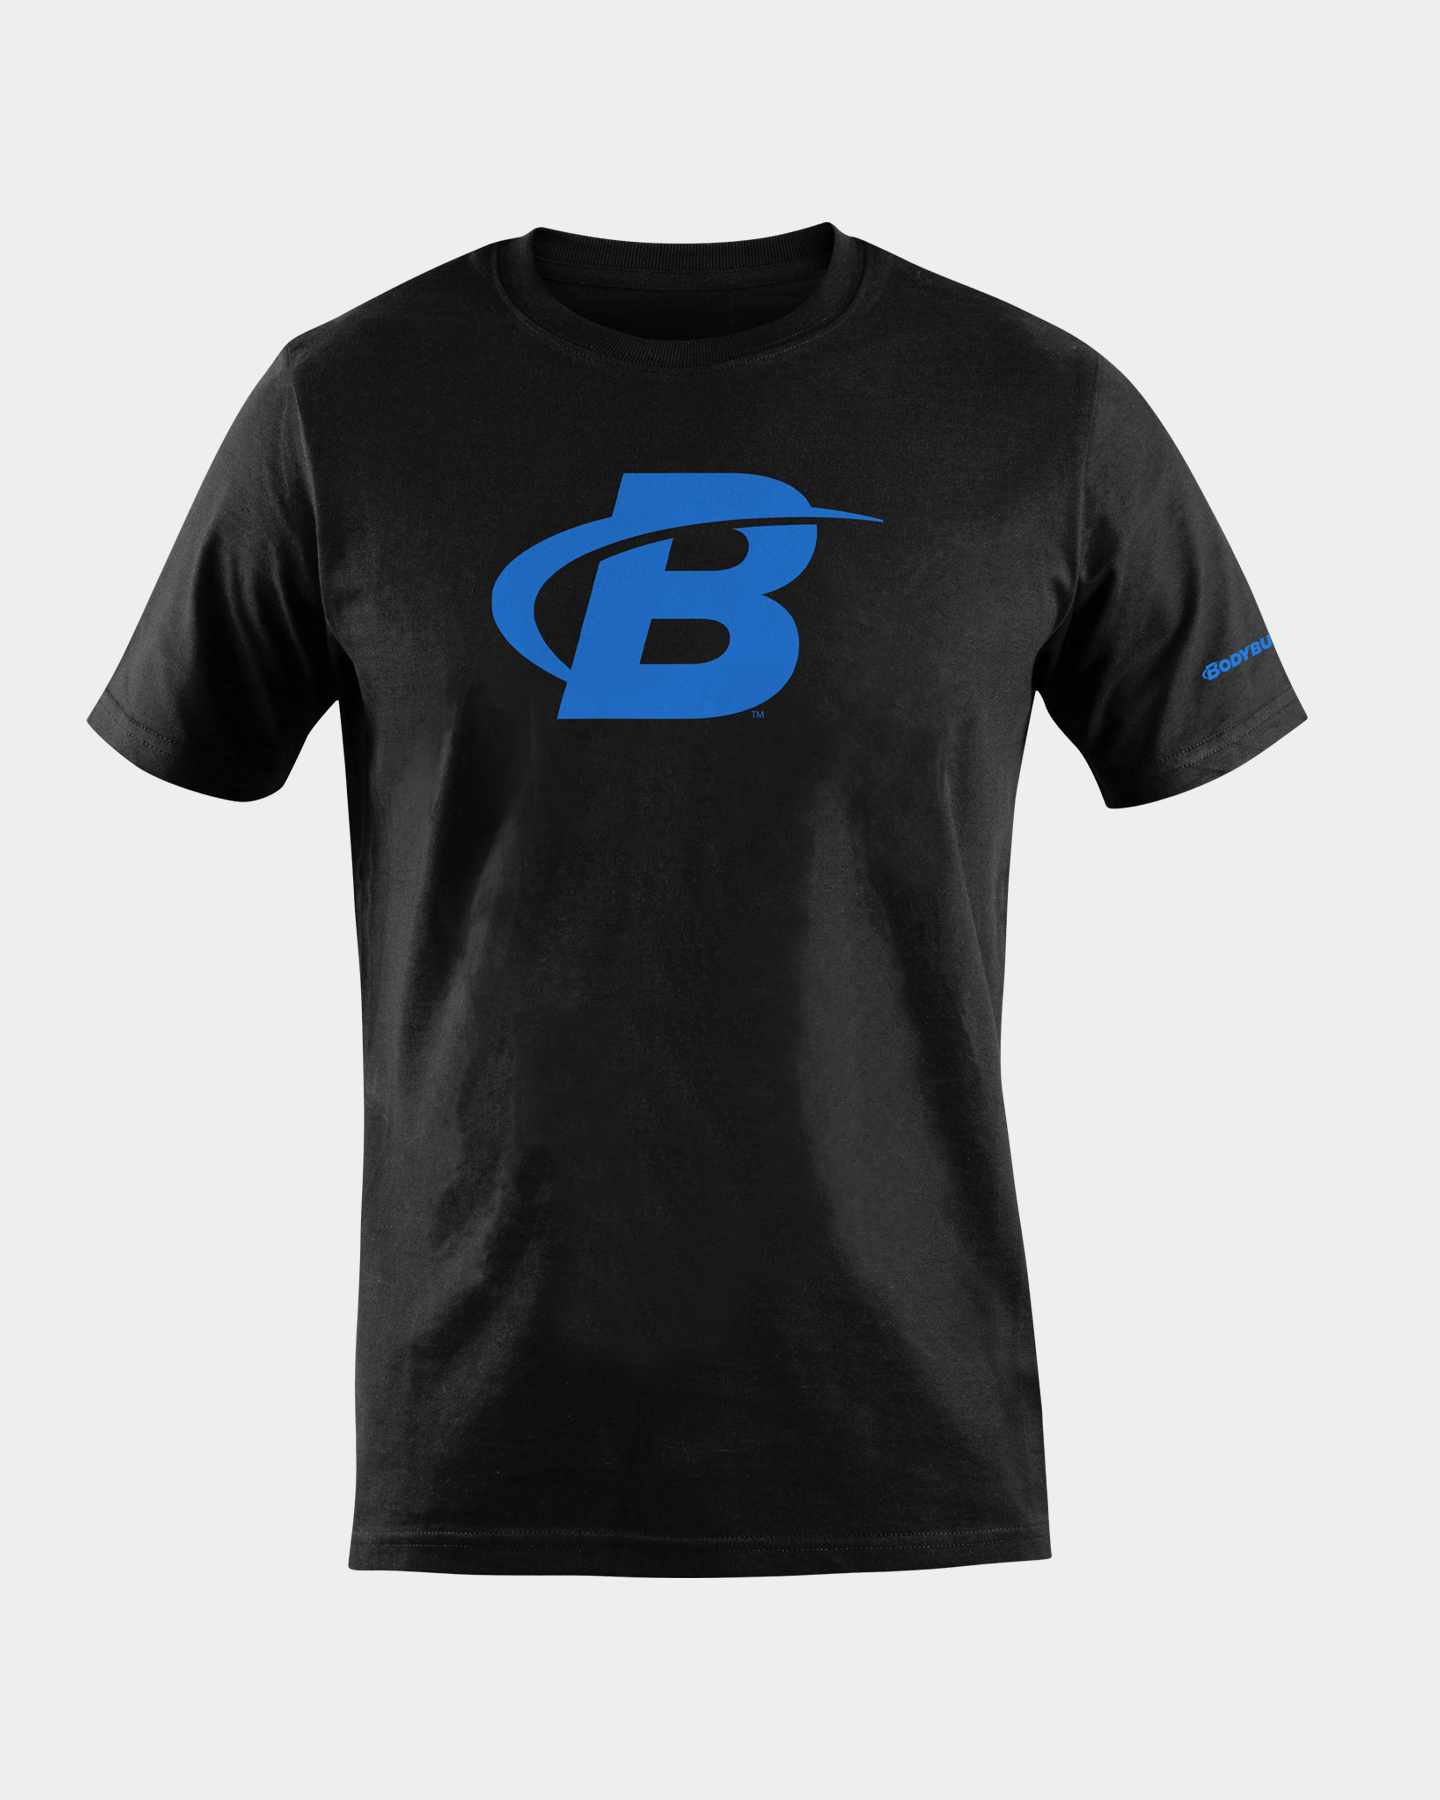 Bodybuilding.com Clothing Classic B Logo Tee, Black, M A1